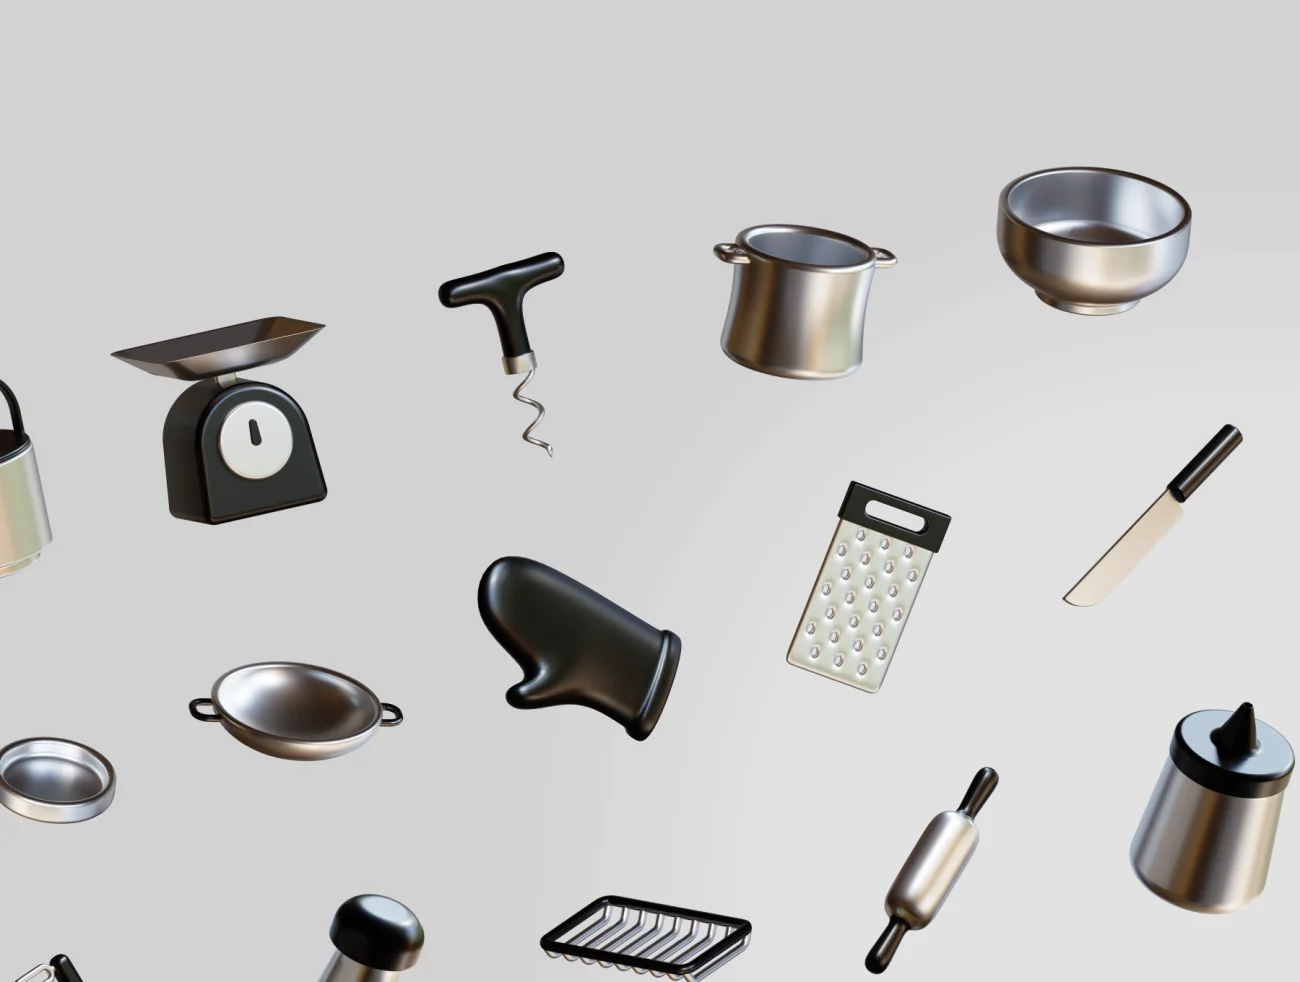 30款厨房炊具锅碗瓢盆3D图标合集 Kitchy – 3D Cooking ware Icons插图11